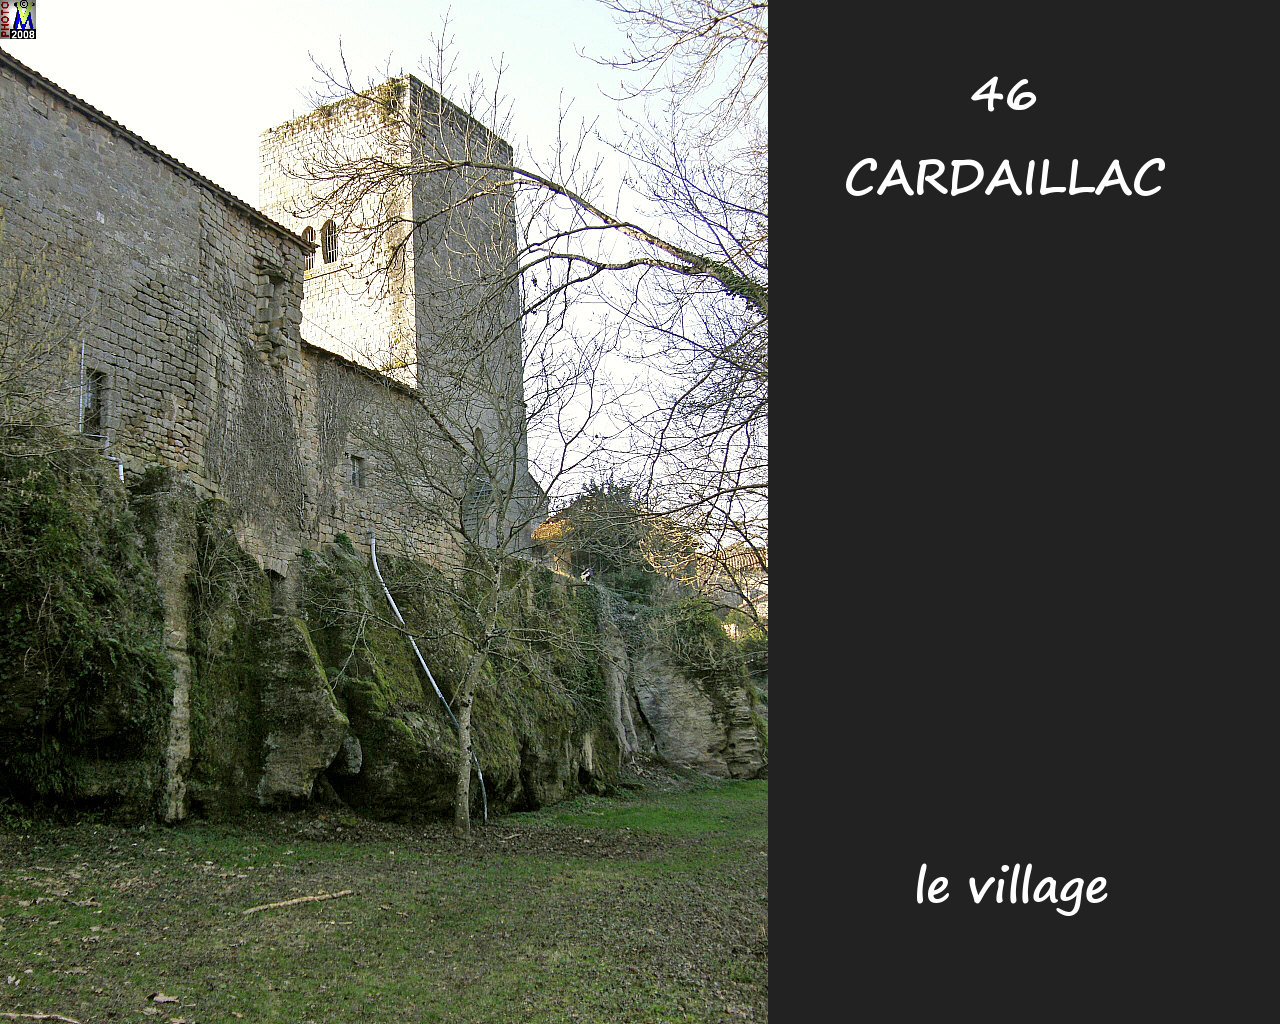 46CARDAILLAC_village_166.jpg